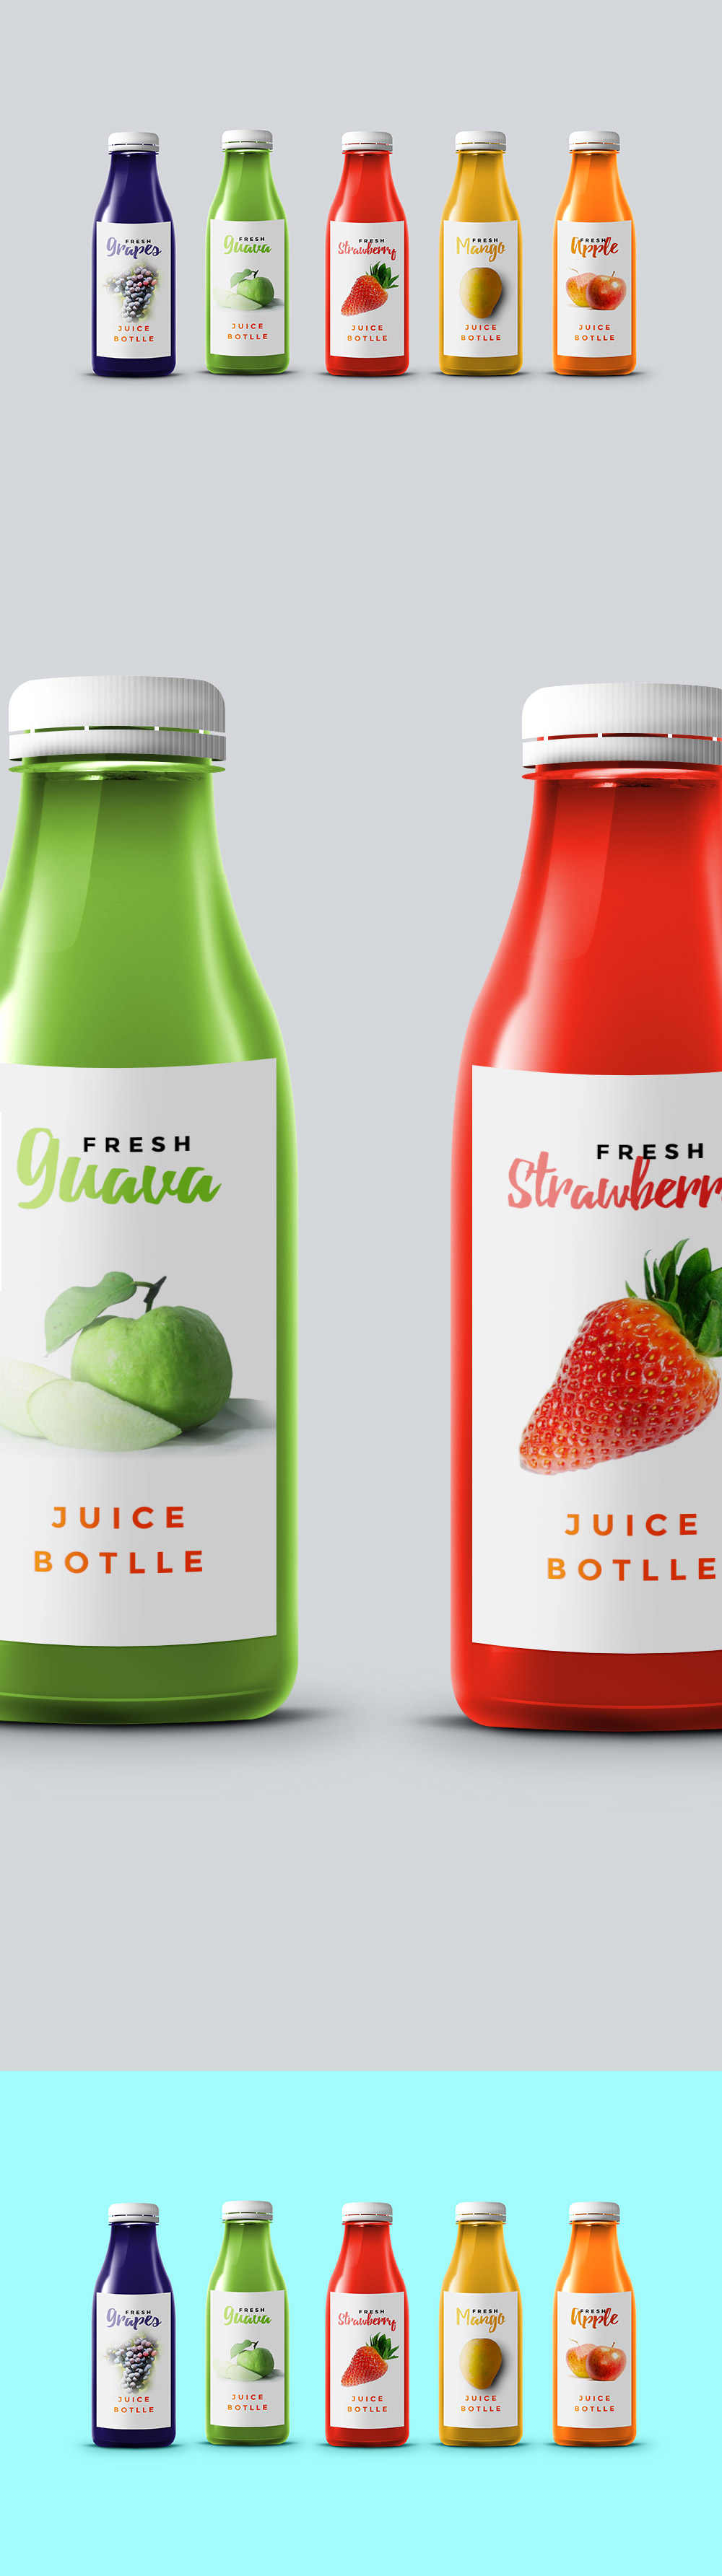 Juice Bottle Mockup Template